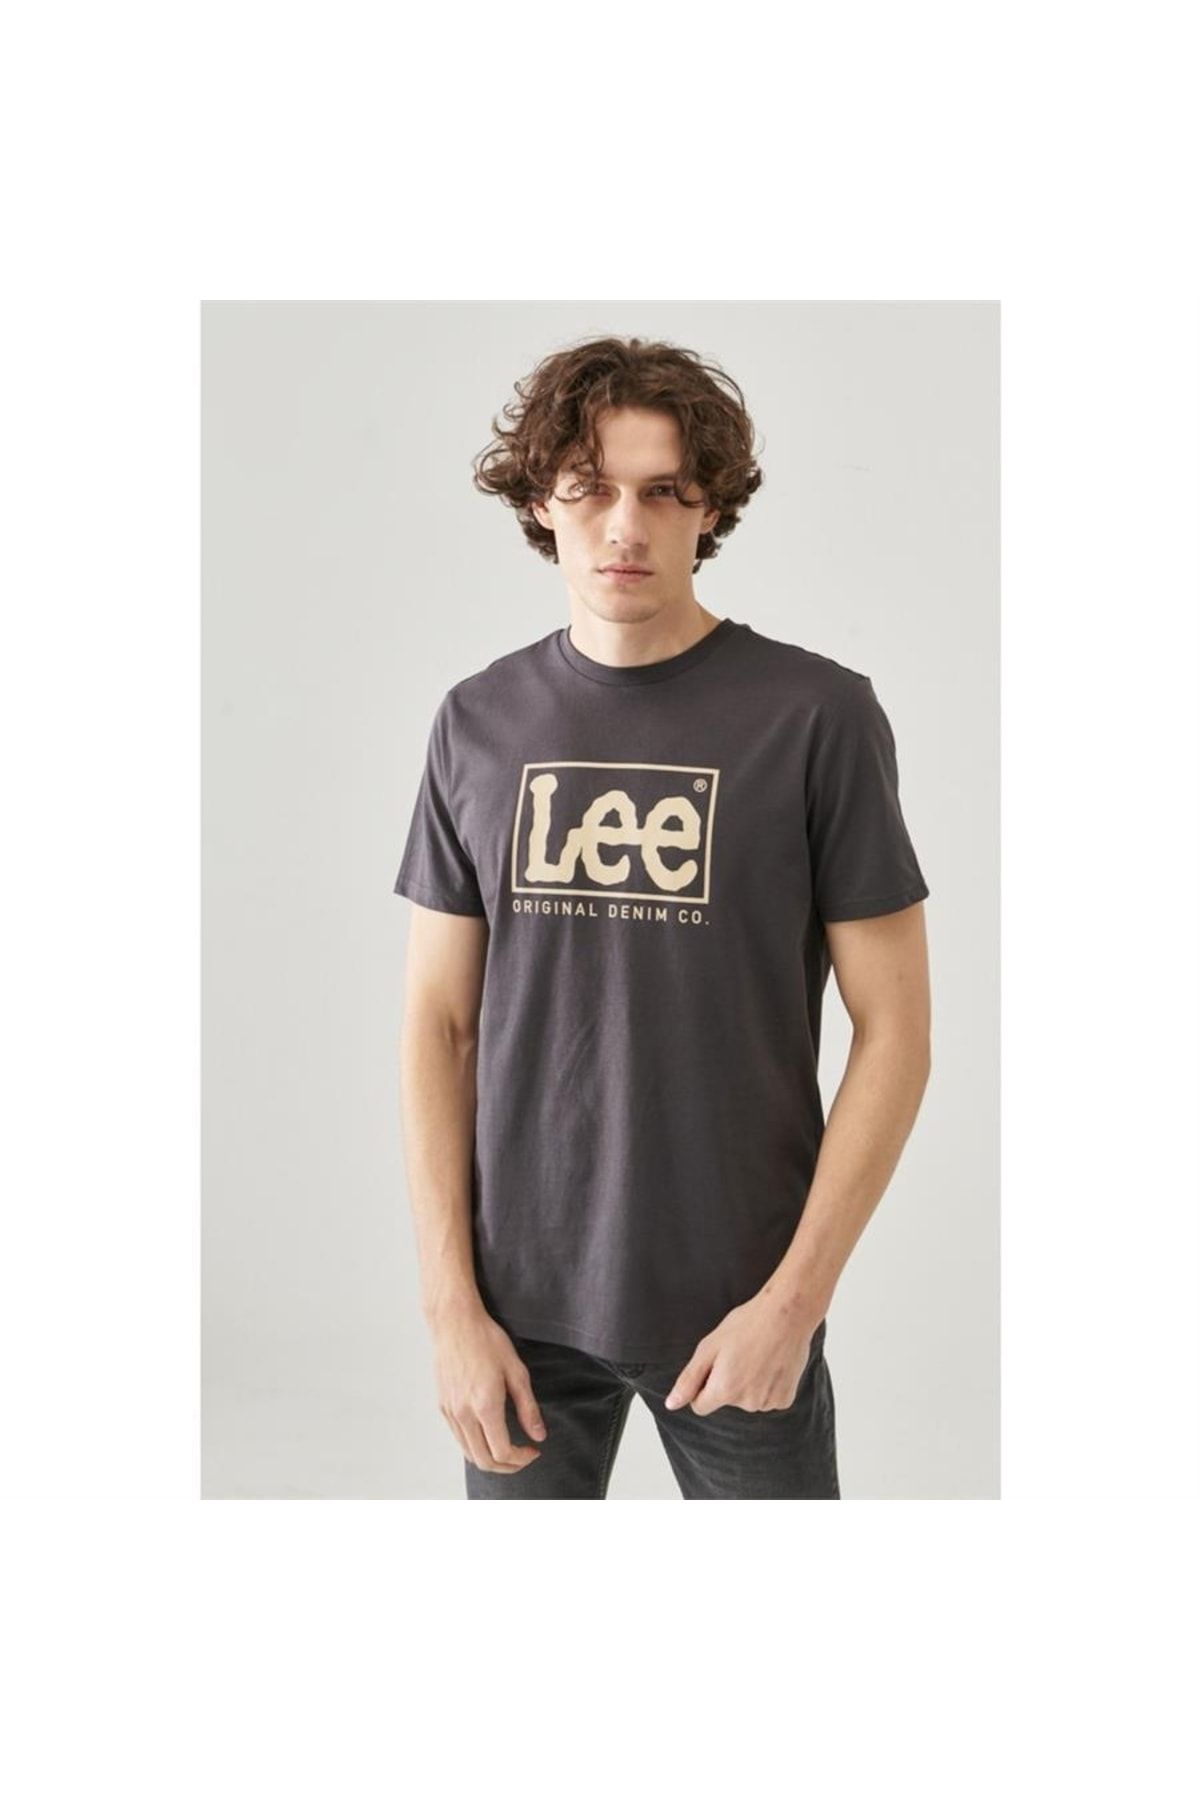 Lee L68tyson Washed Siyah Erkek T-shirt